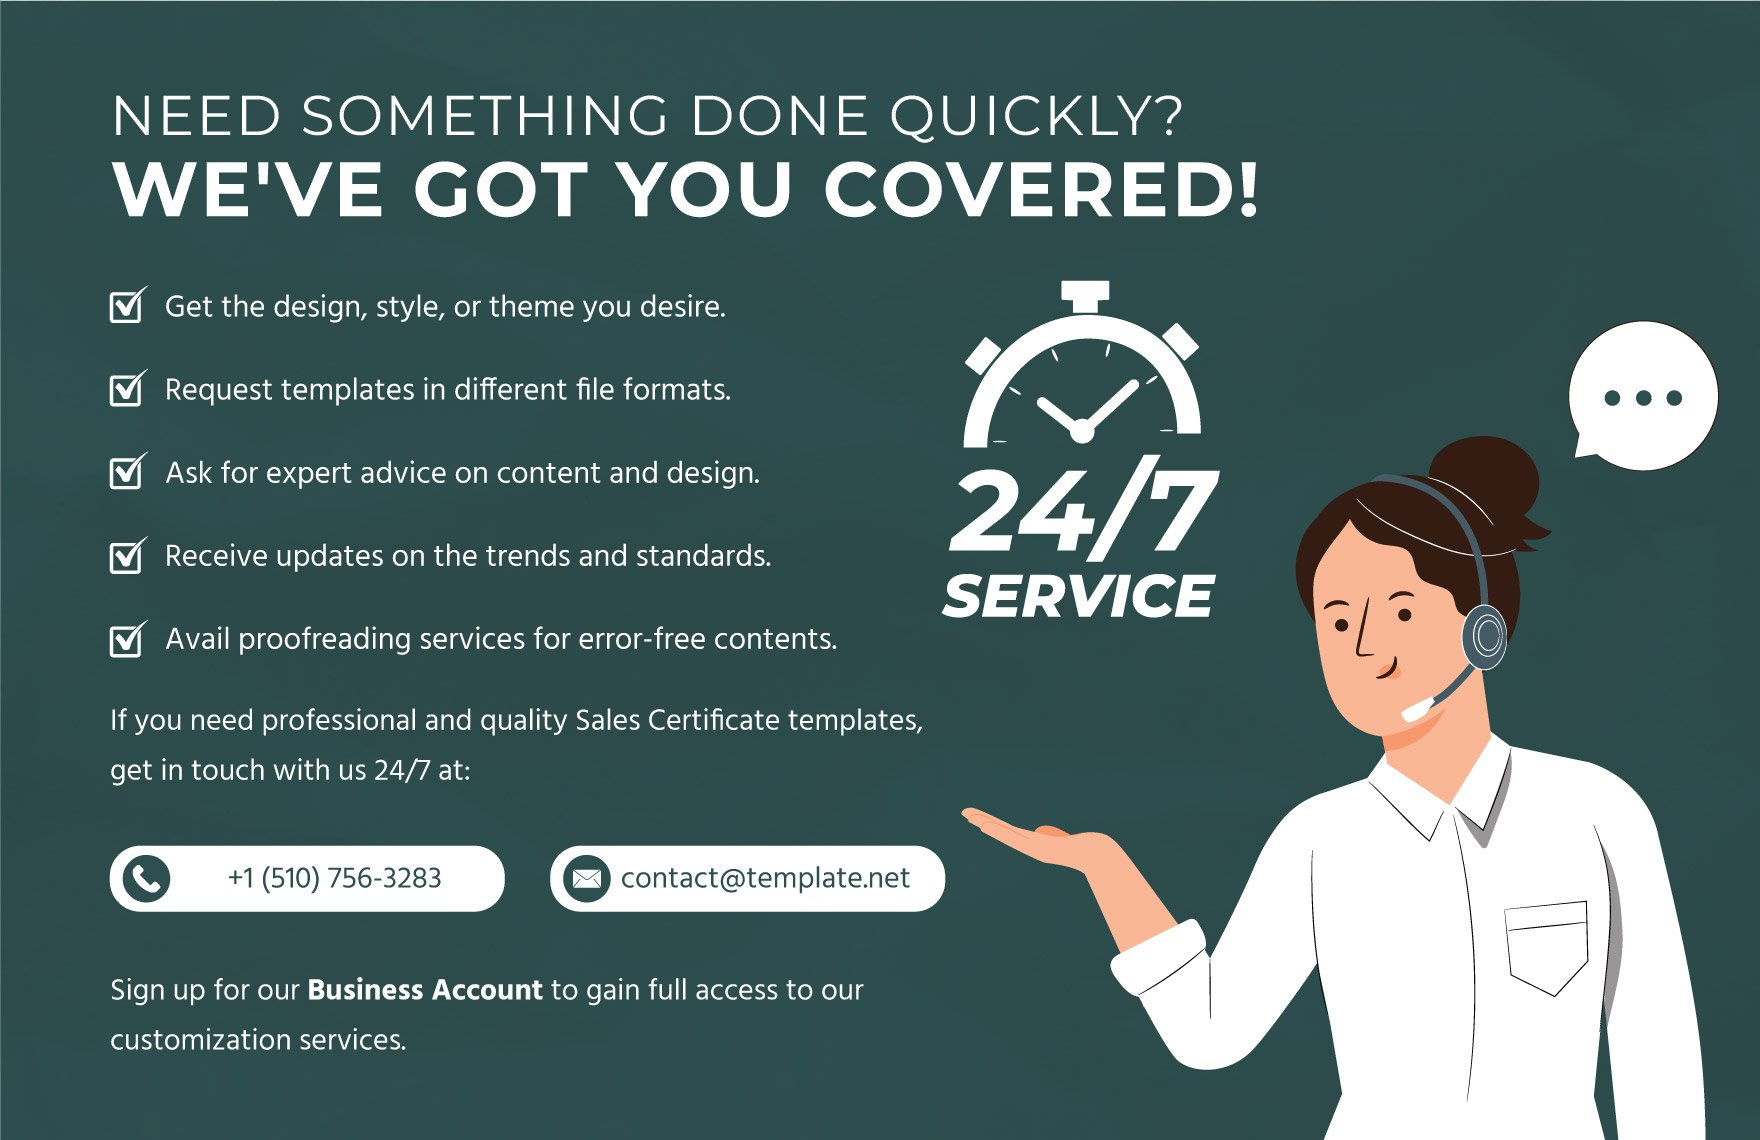 Sales Best Customer Service Certificate Template